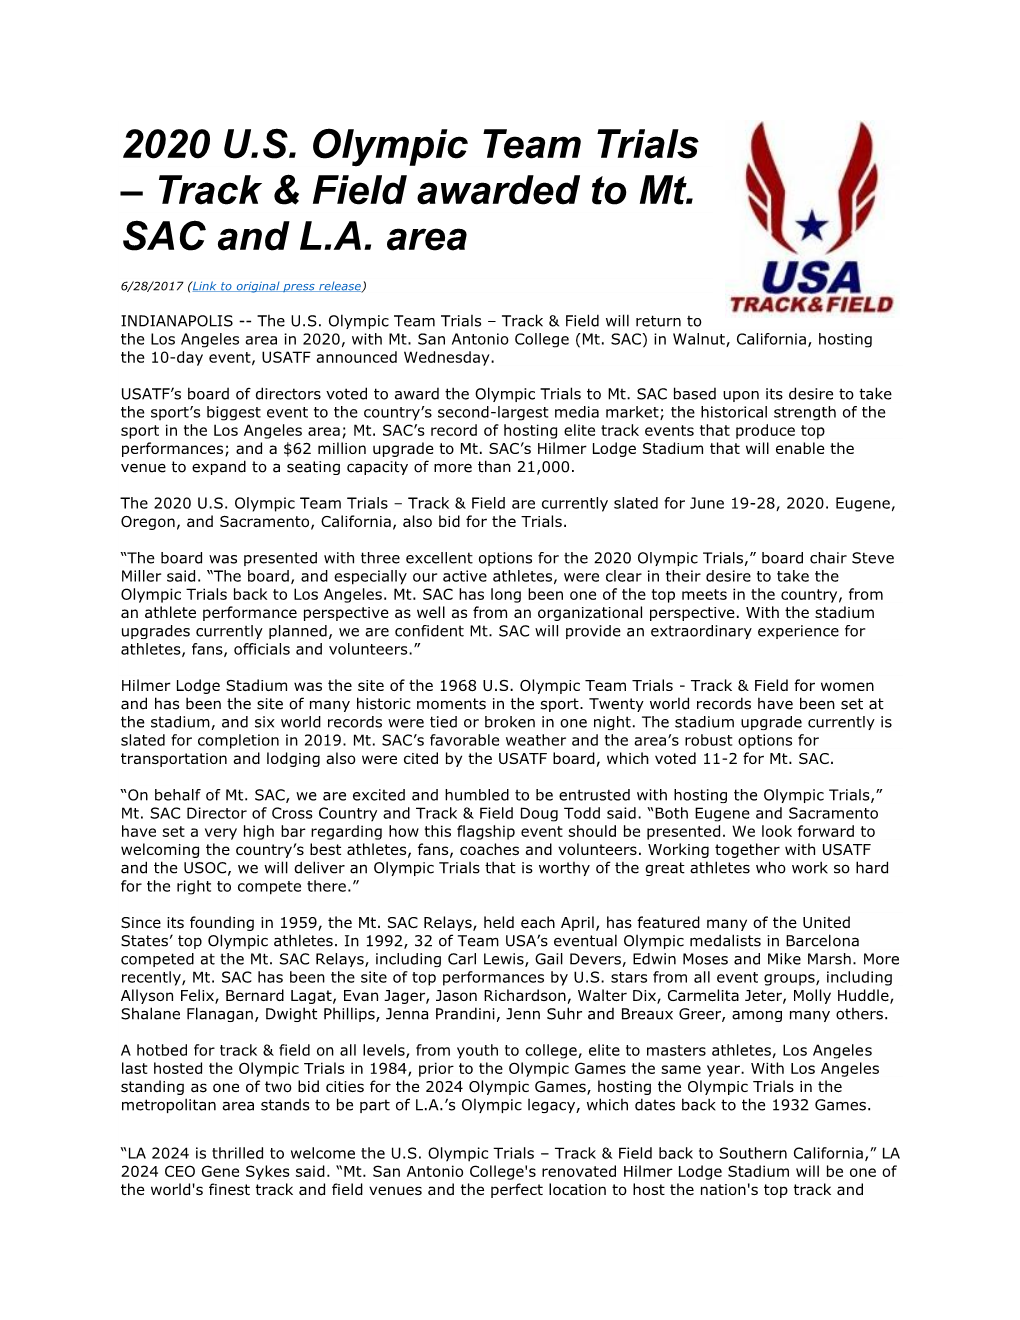 2020 U.S. Olympic Team Trials – Track & Field Awarded to Mt. SAC